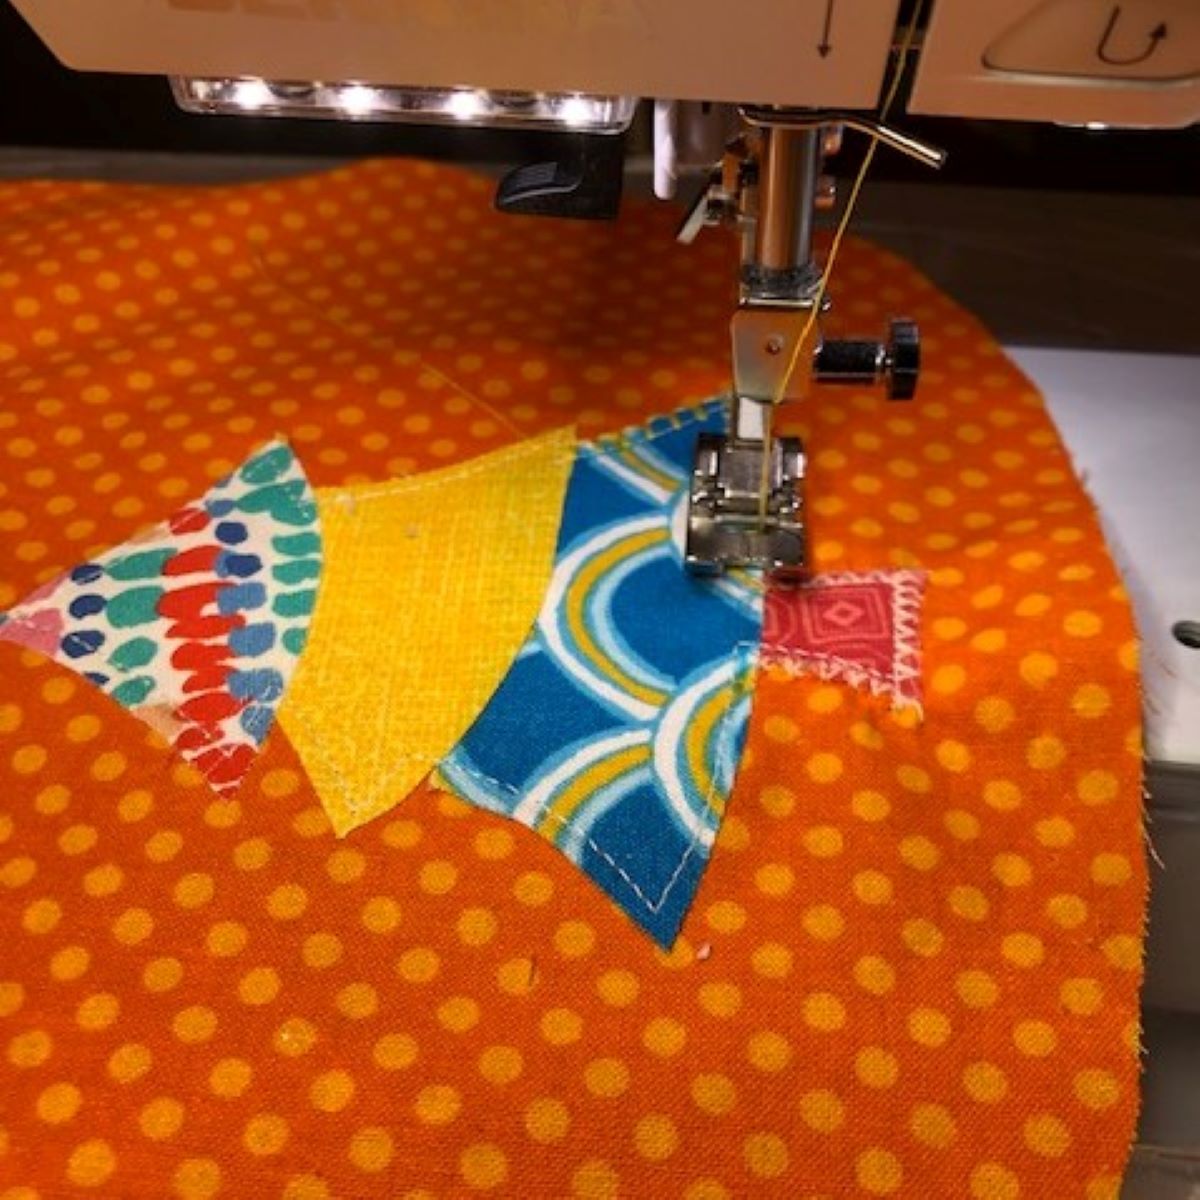 Appliqued Bib Burp Cloth Set Tutorial: stitch applique detail